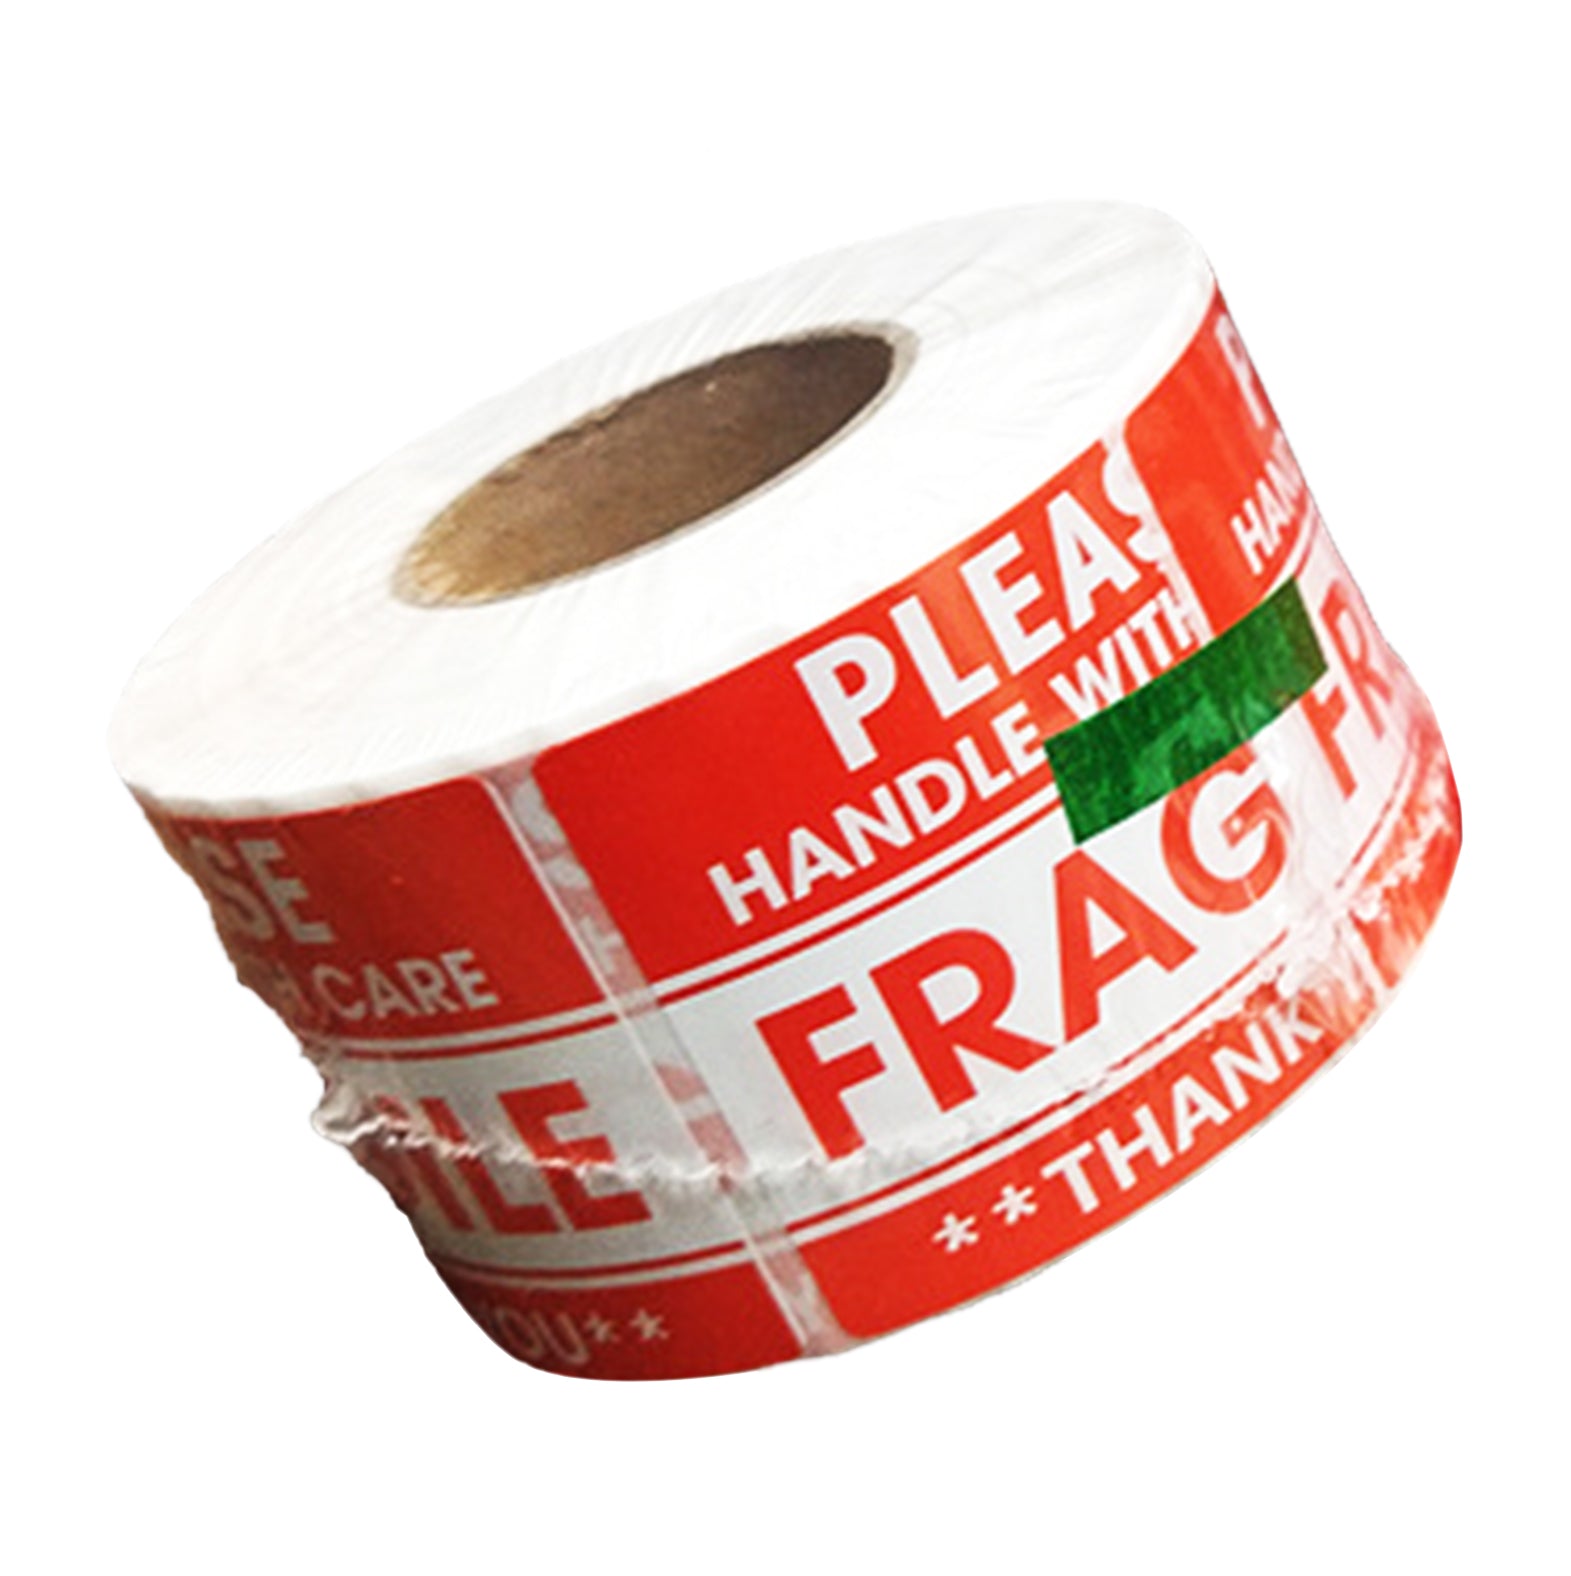 2"x3.5" Fragile/Upward Carton Sticker - Reel - 500 Packs-Flag Menu